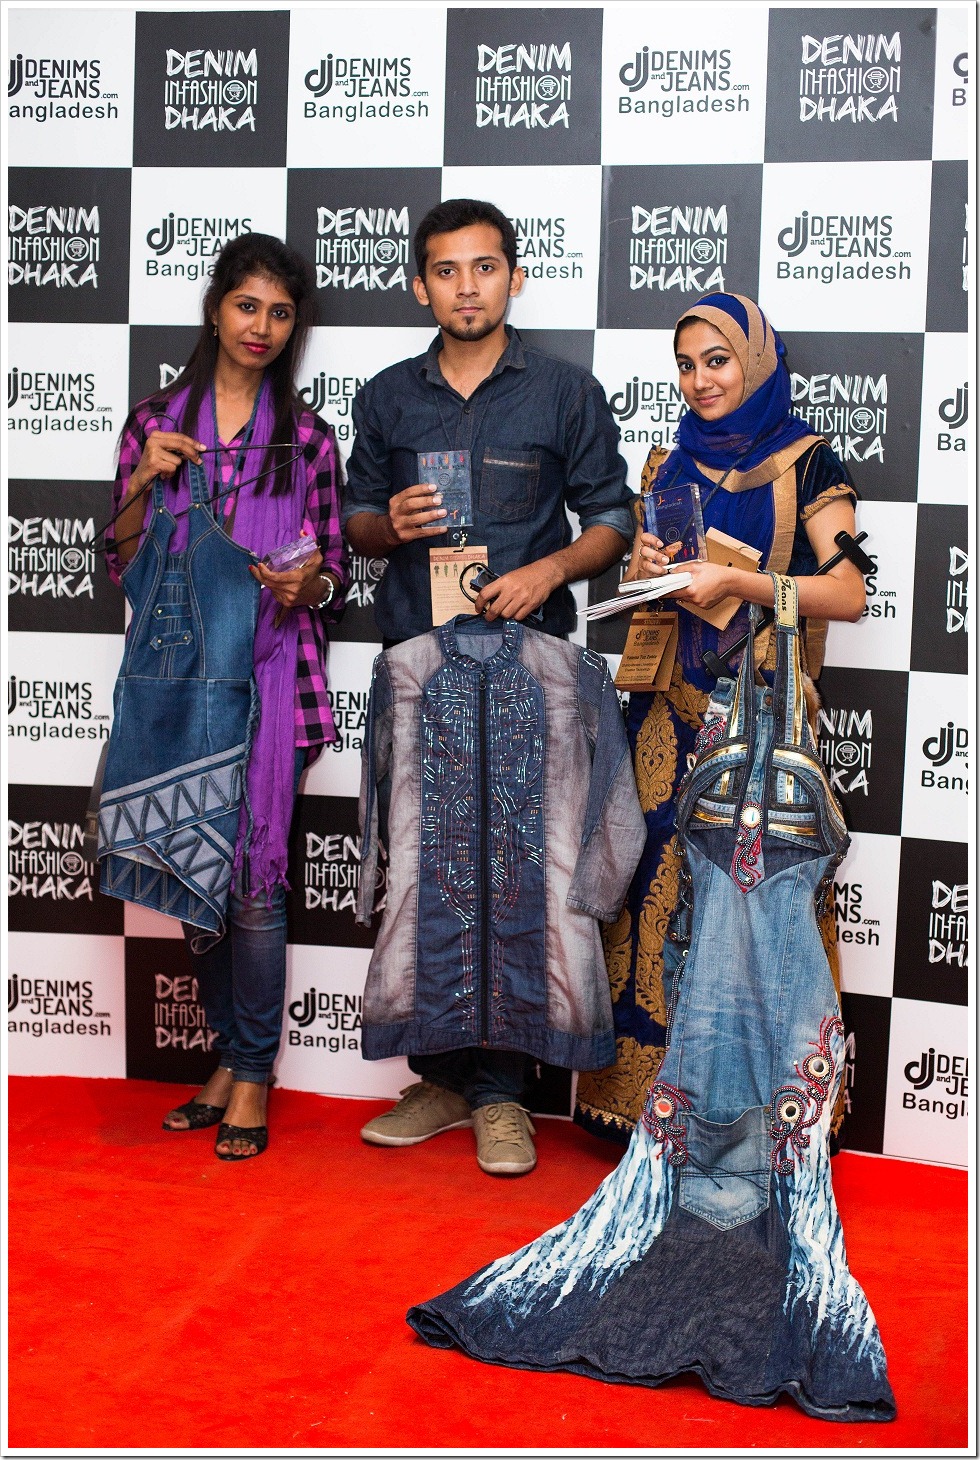 2nd Bangladesh Fashion Students' Denim Design Contest at 5th Edition Denimsadneajns.com Bangladesh